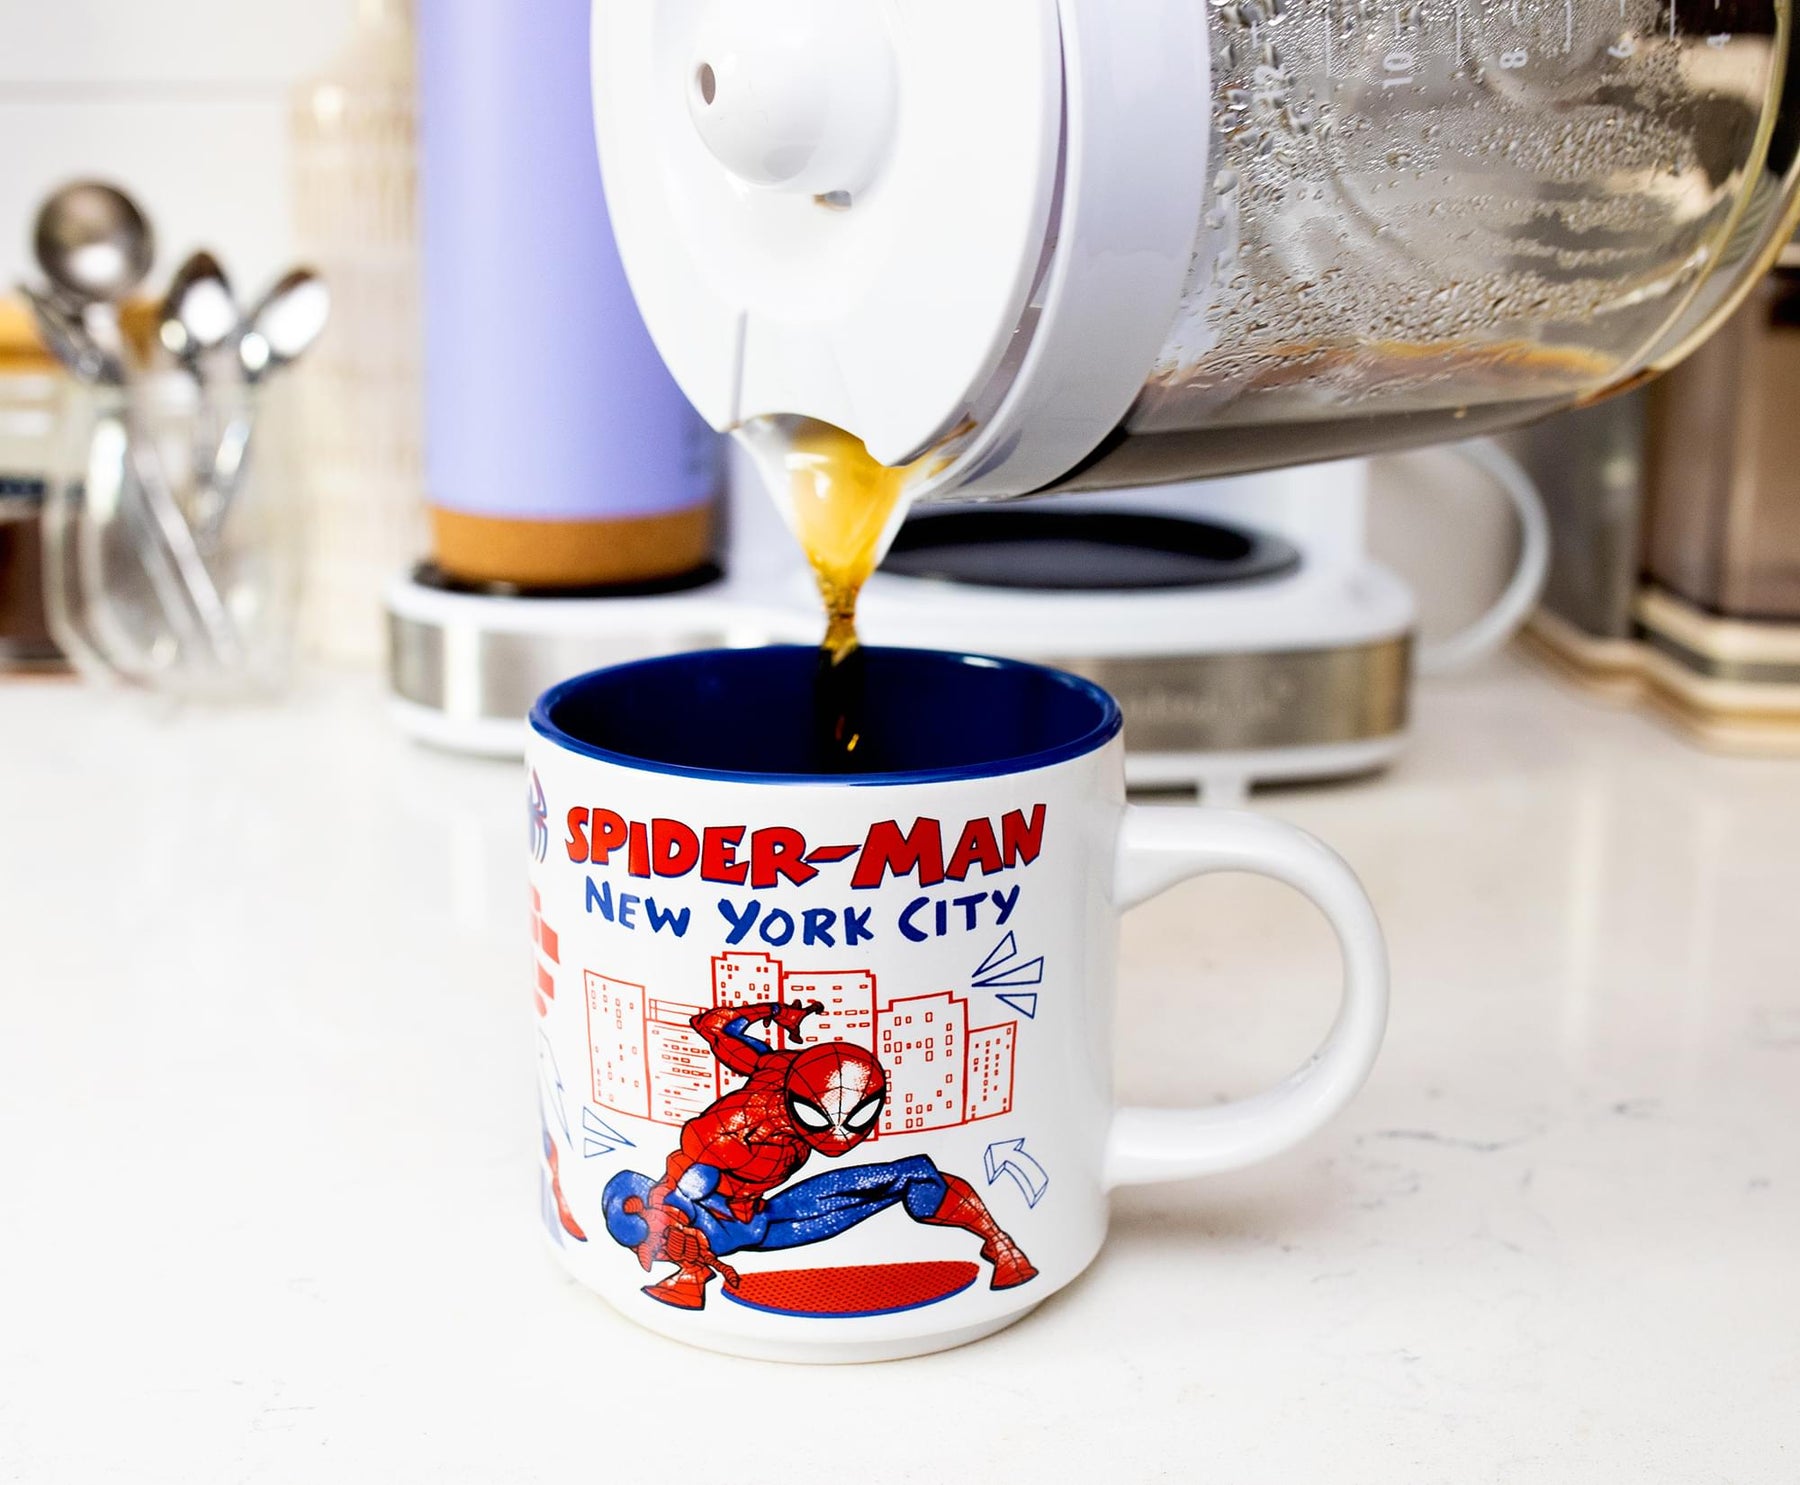 Marvel Spider-Man All Over Print 13oz Ceramic Mug